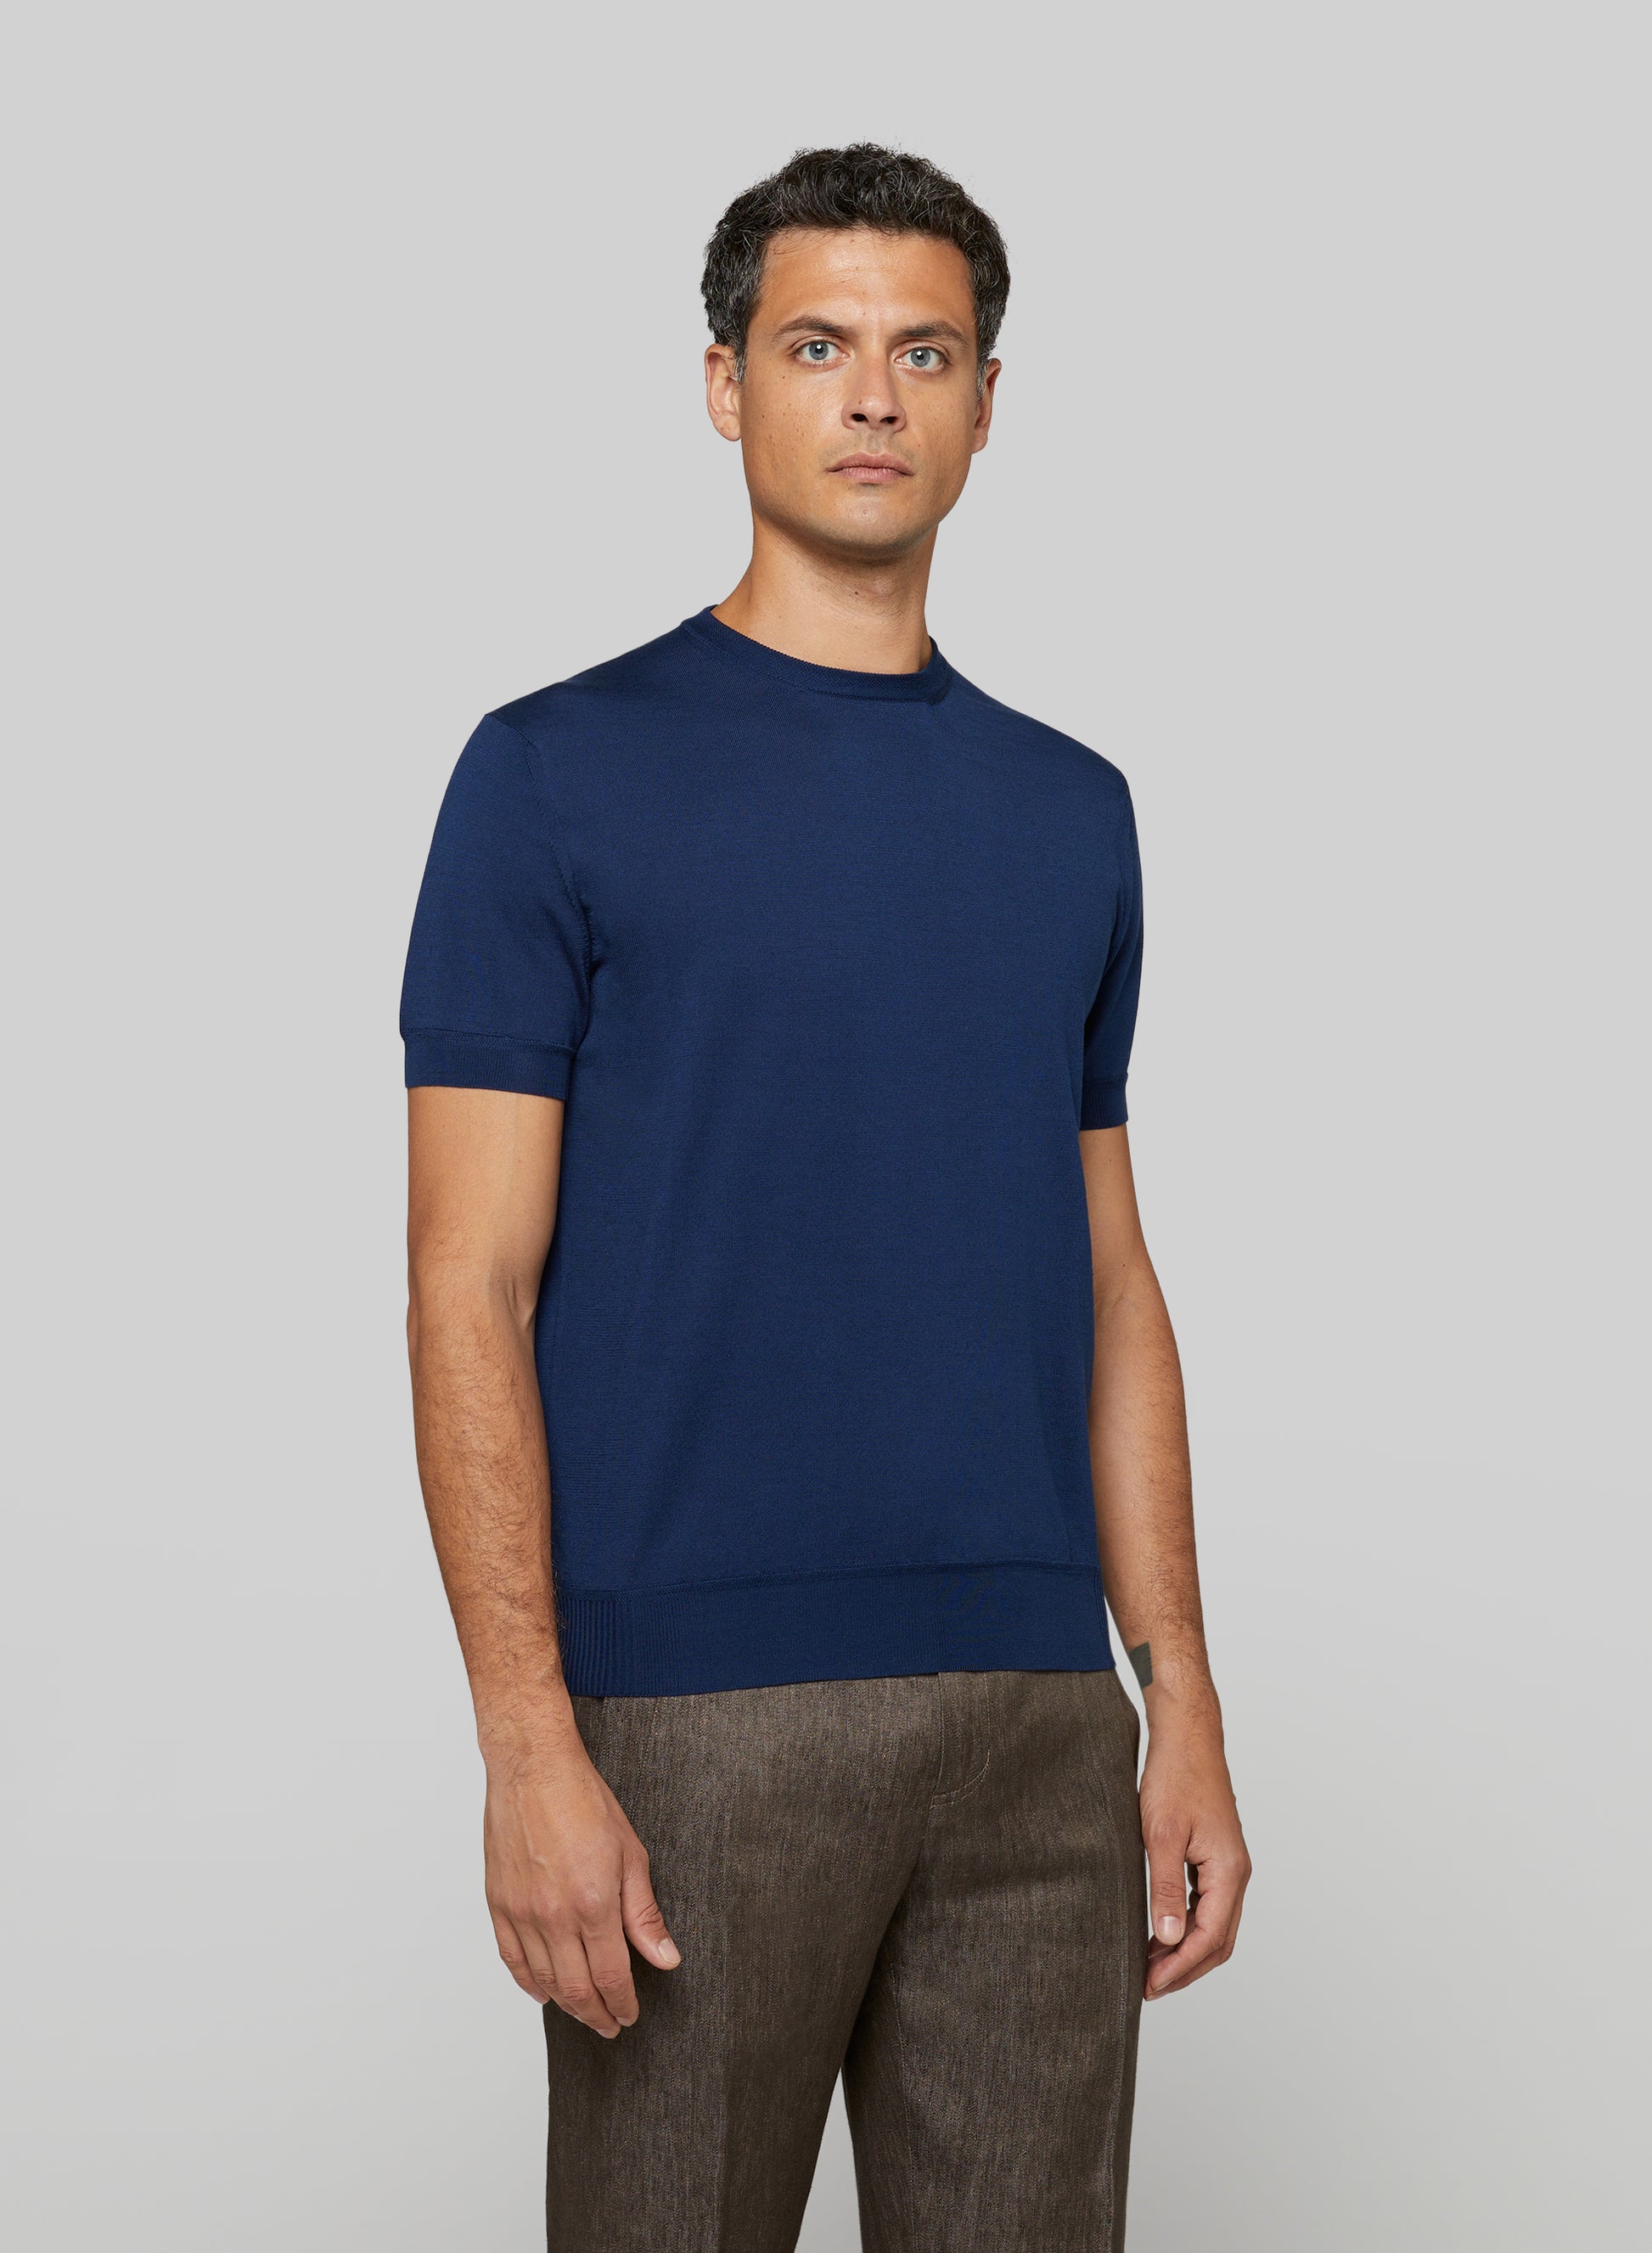 korrelat Forfølge Mistillid Men's Navy Sea Silk Short Sleeve Crewneck Tee Shirt SS23